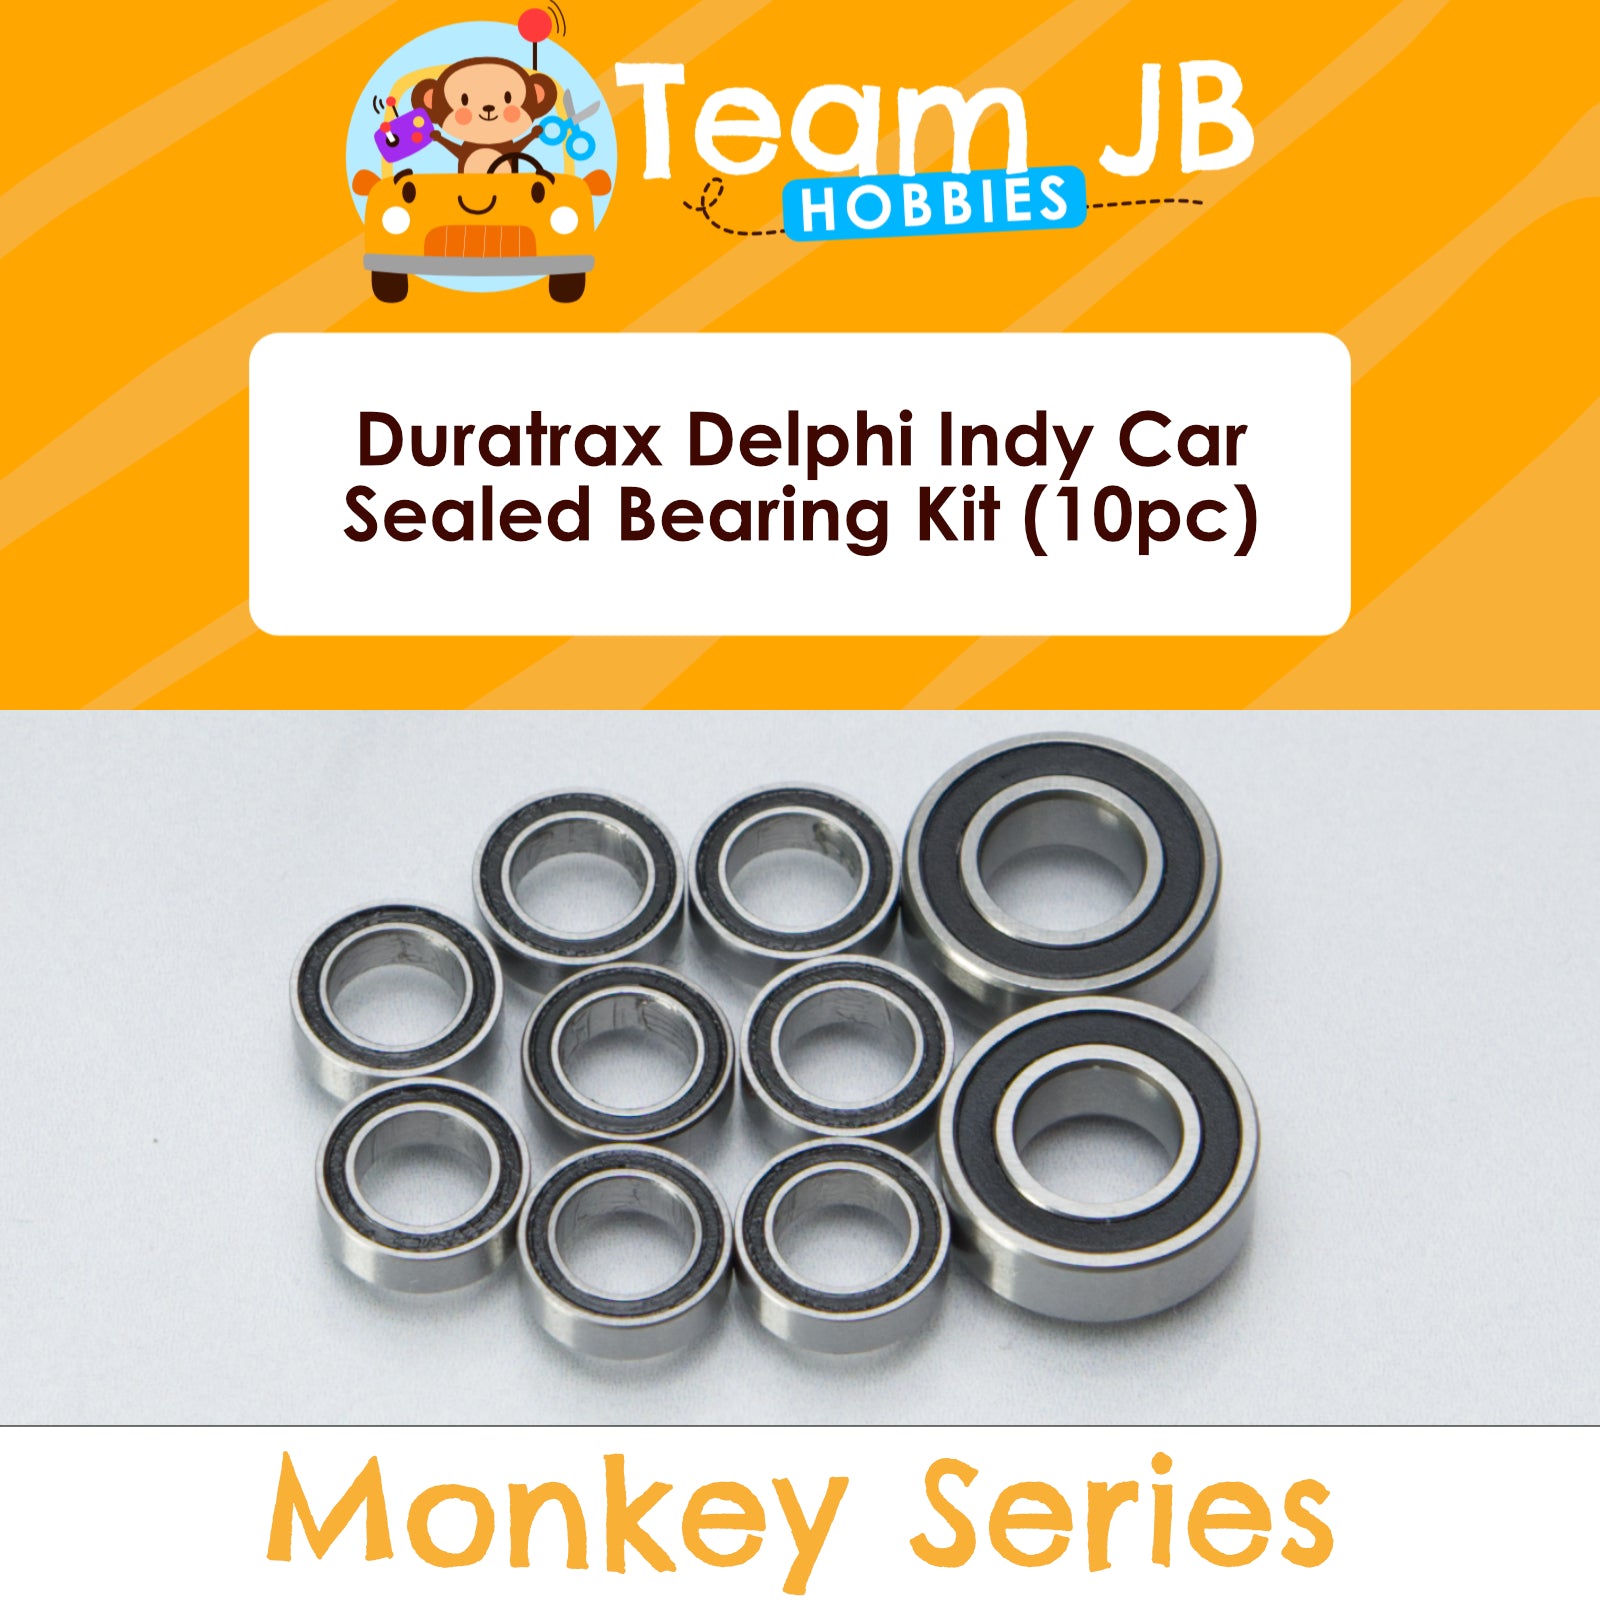 Duratrax Delphi Indy Car - Sealed Bearing Kit